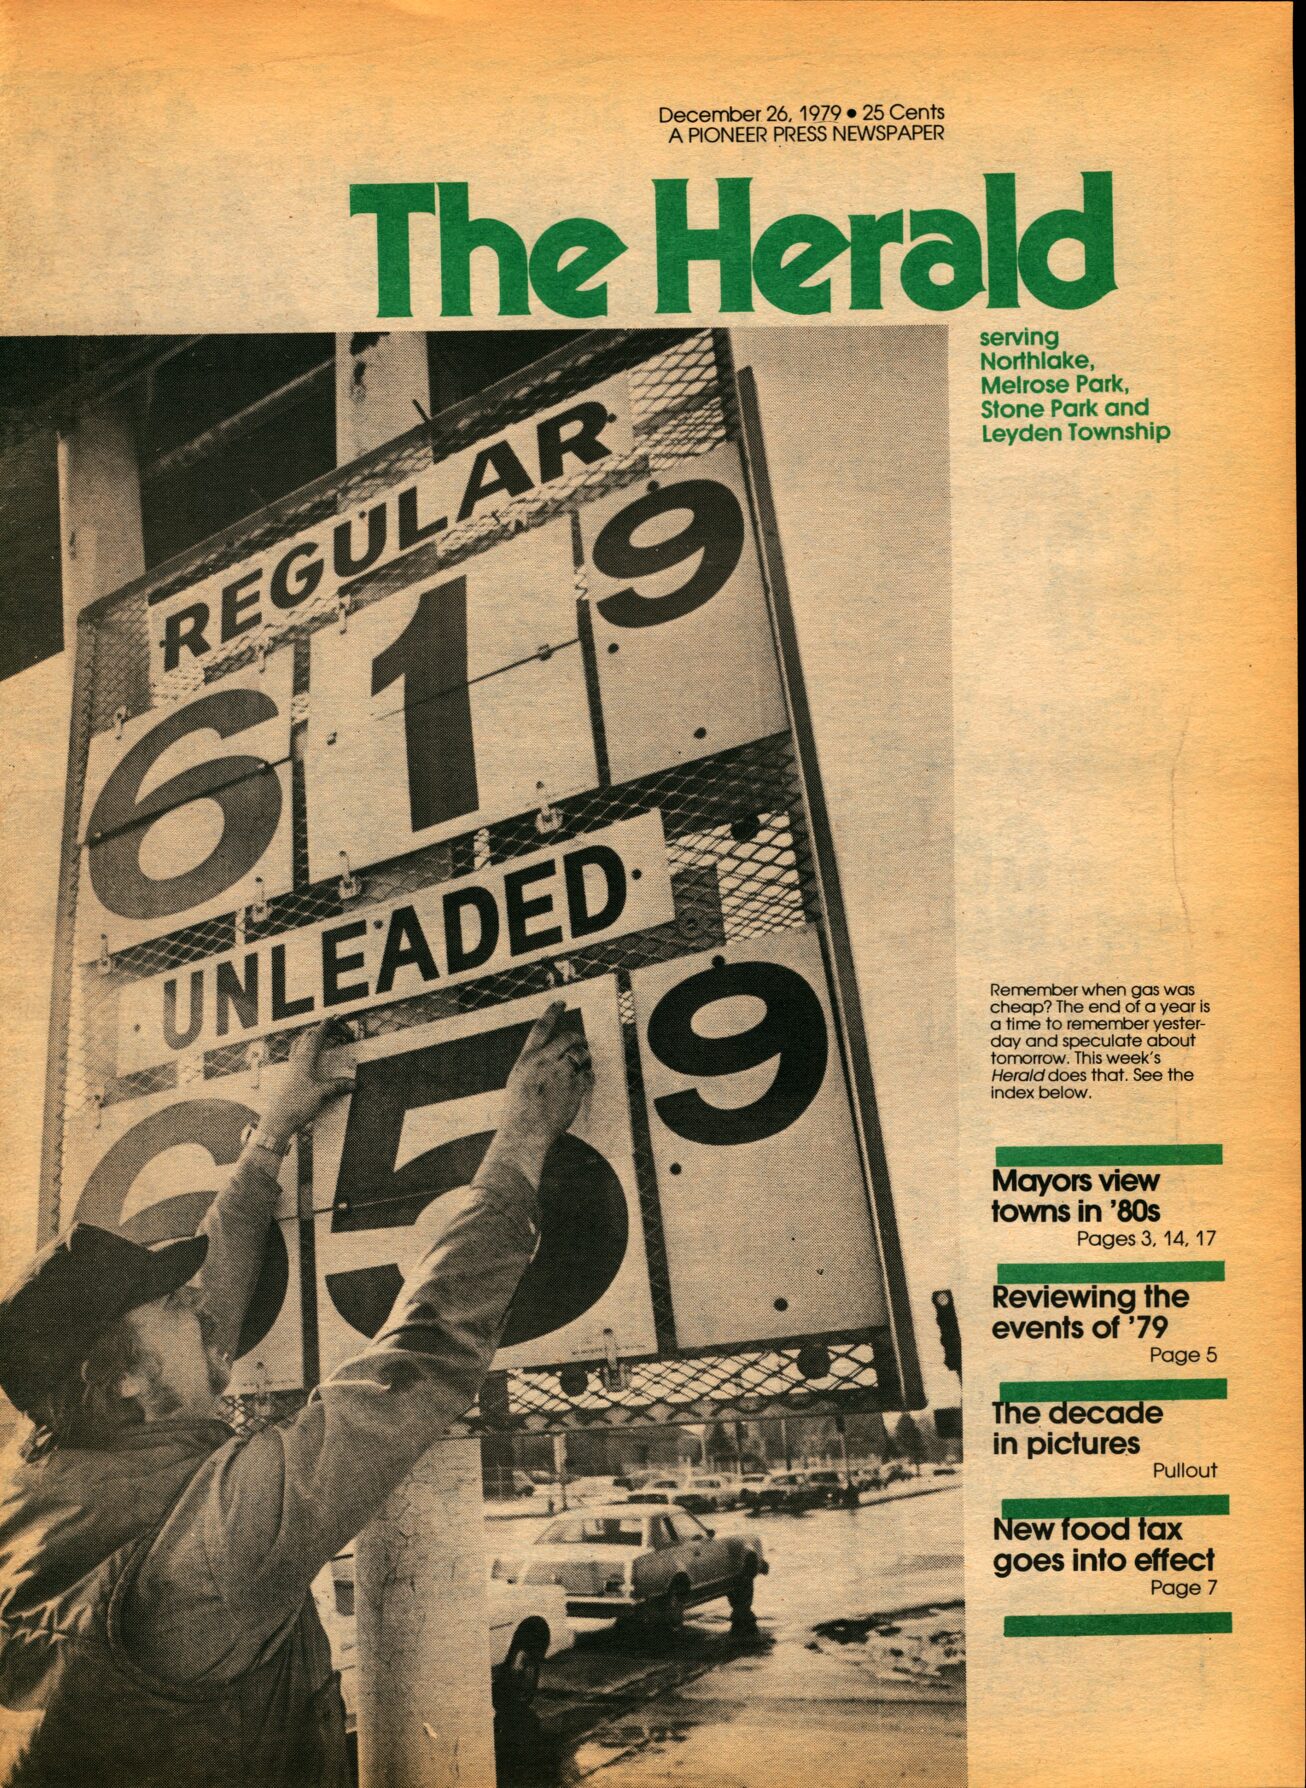 The Herald – 19791226